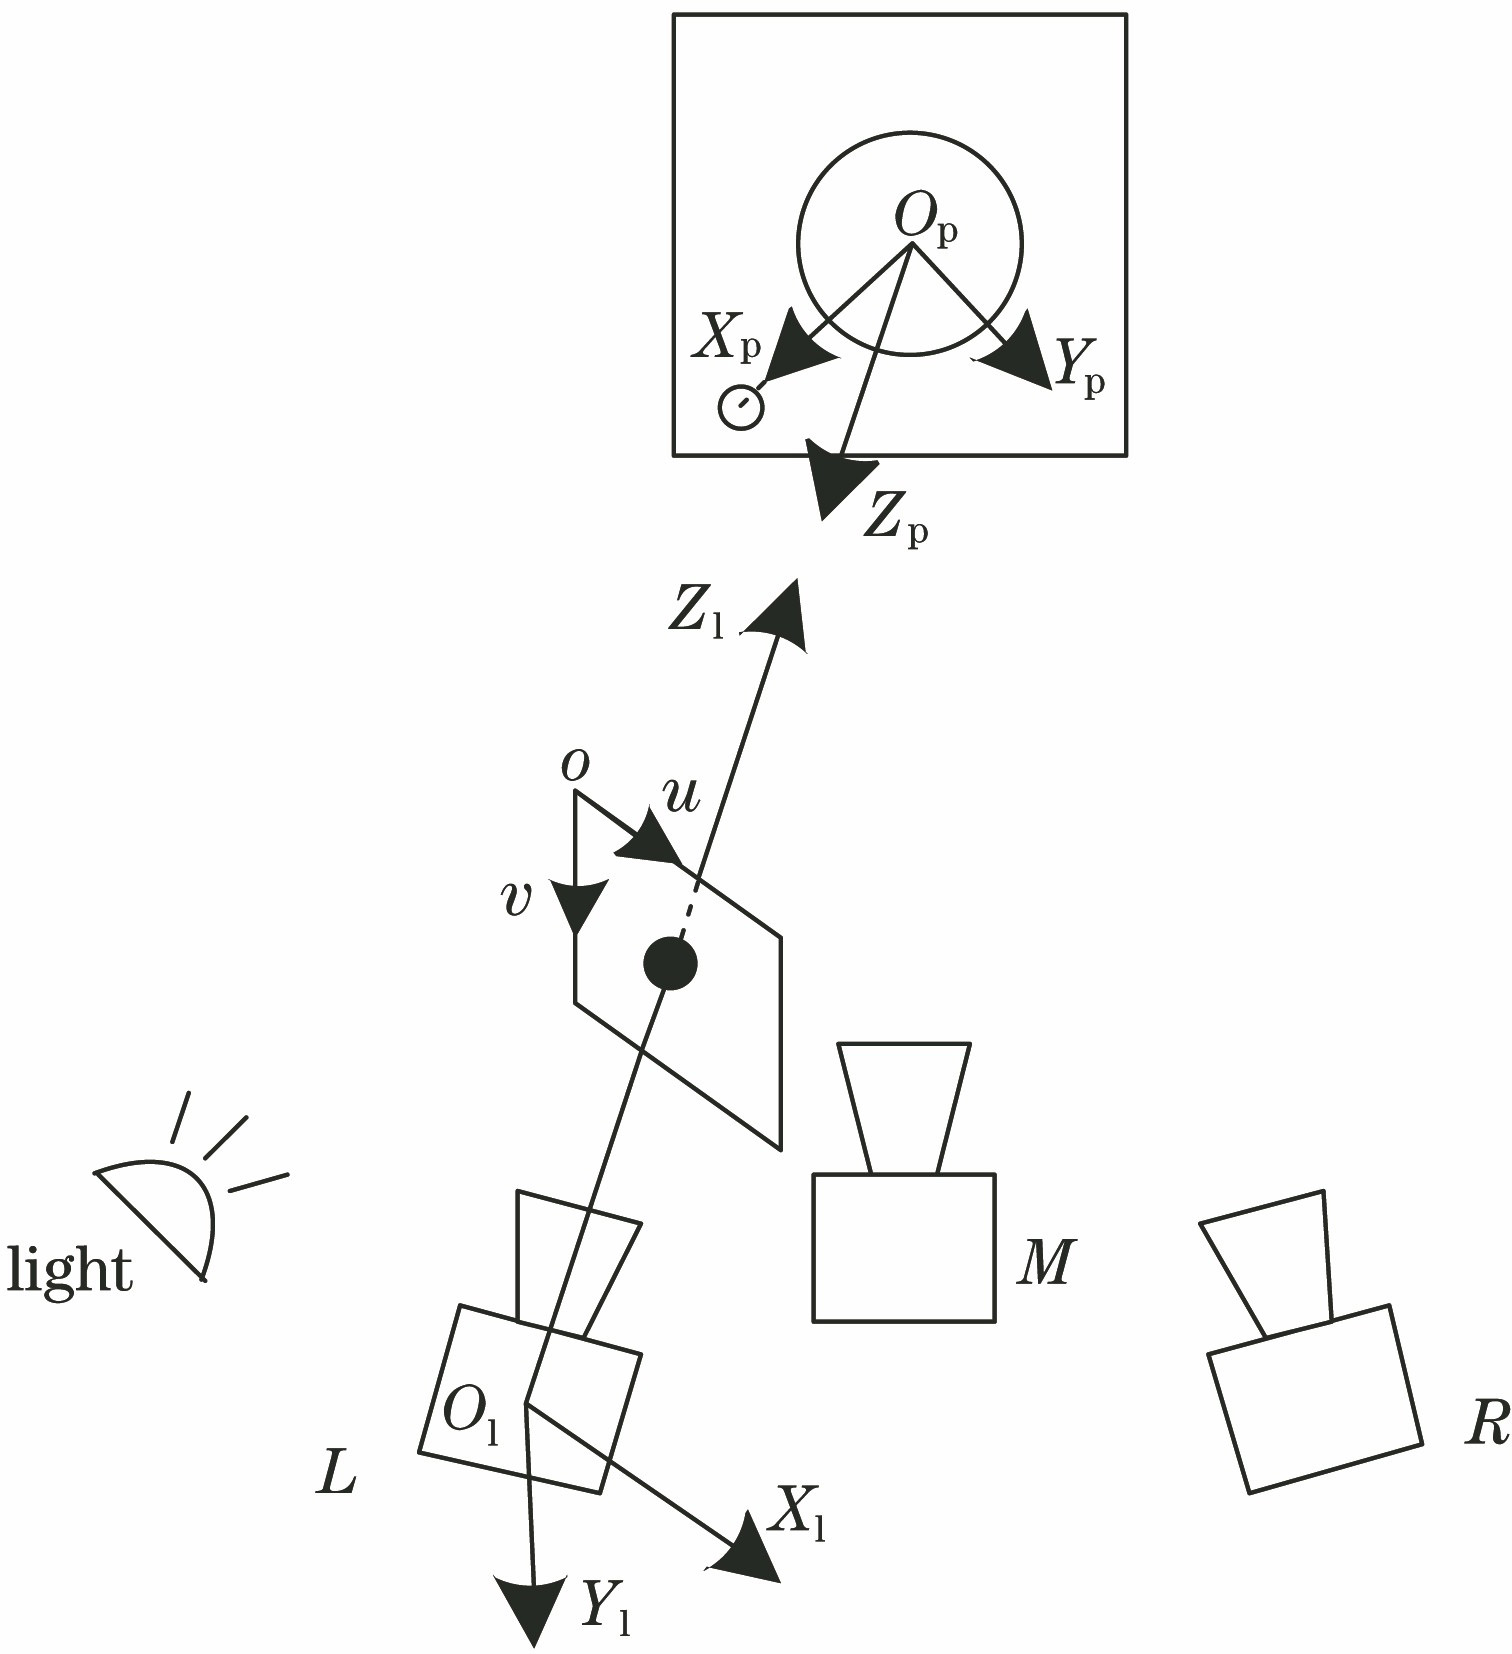 Interrelation of coordinate system in trinocular vision measuring system